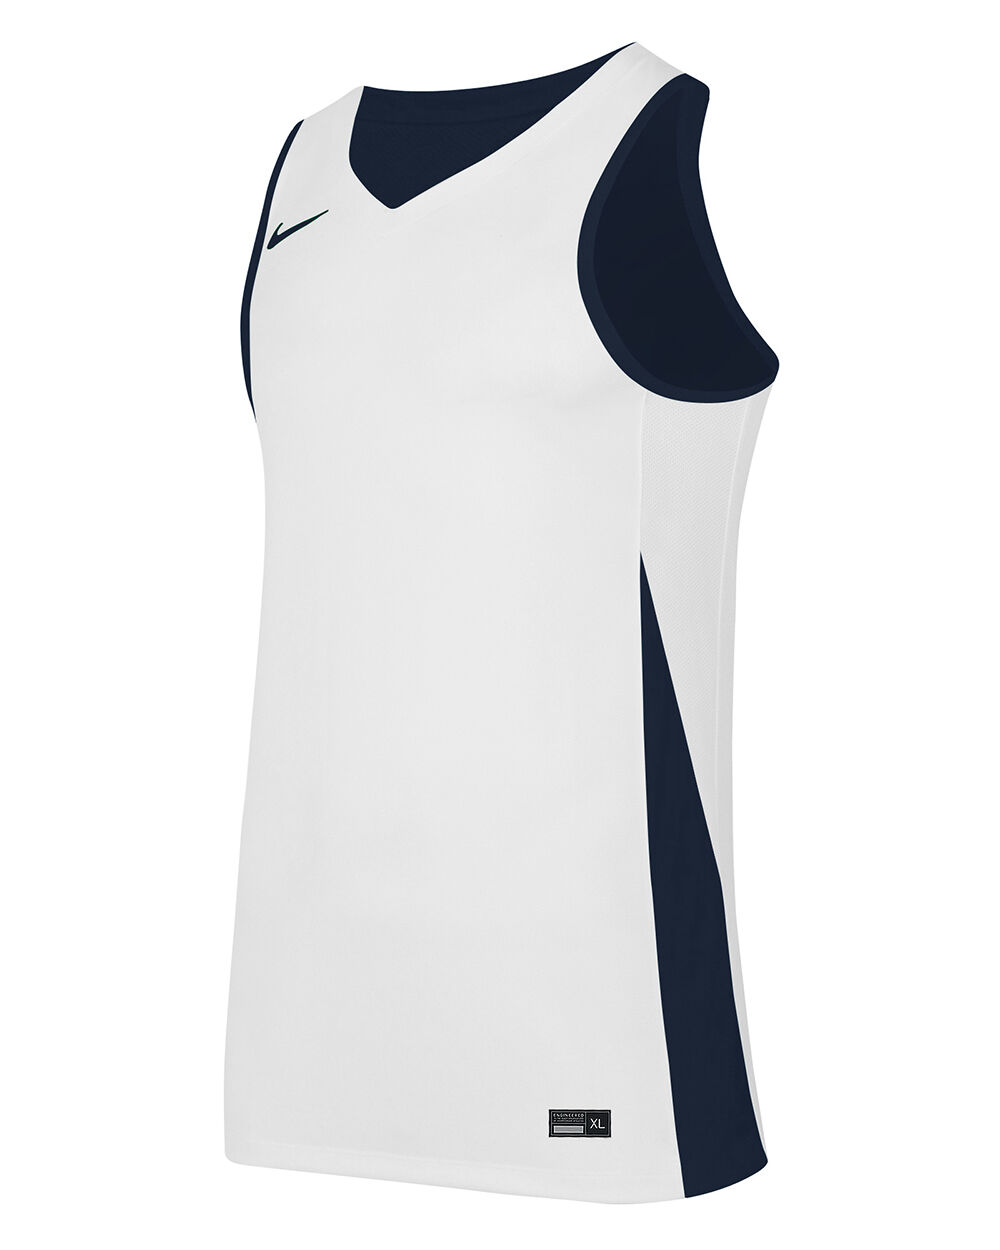 Nike Maglia da basket reversibile Team Blu Navy e Bianco Bambino NT0204-451 L